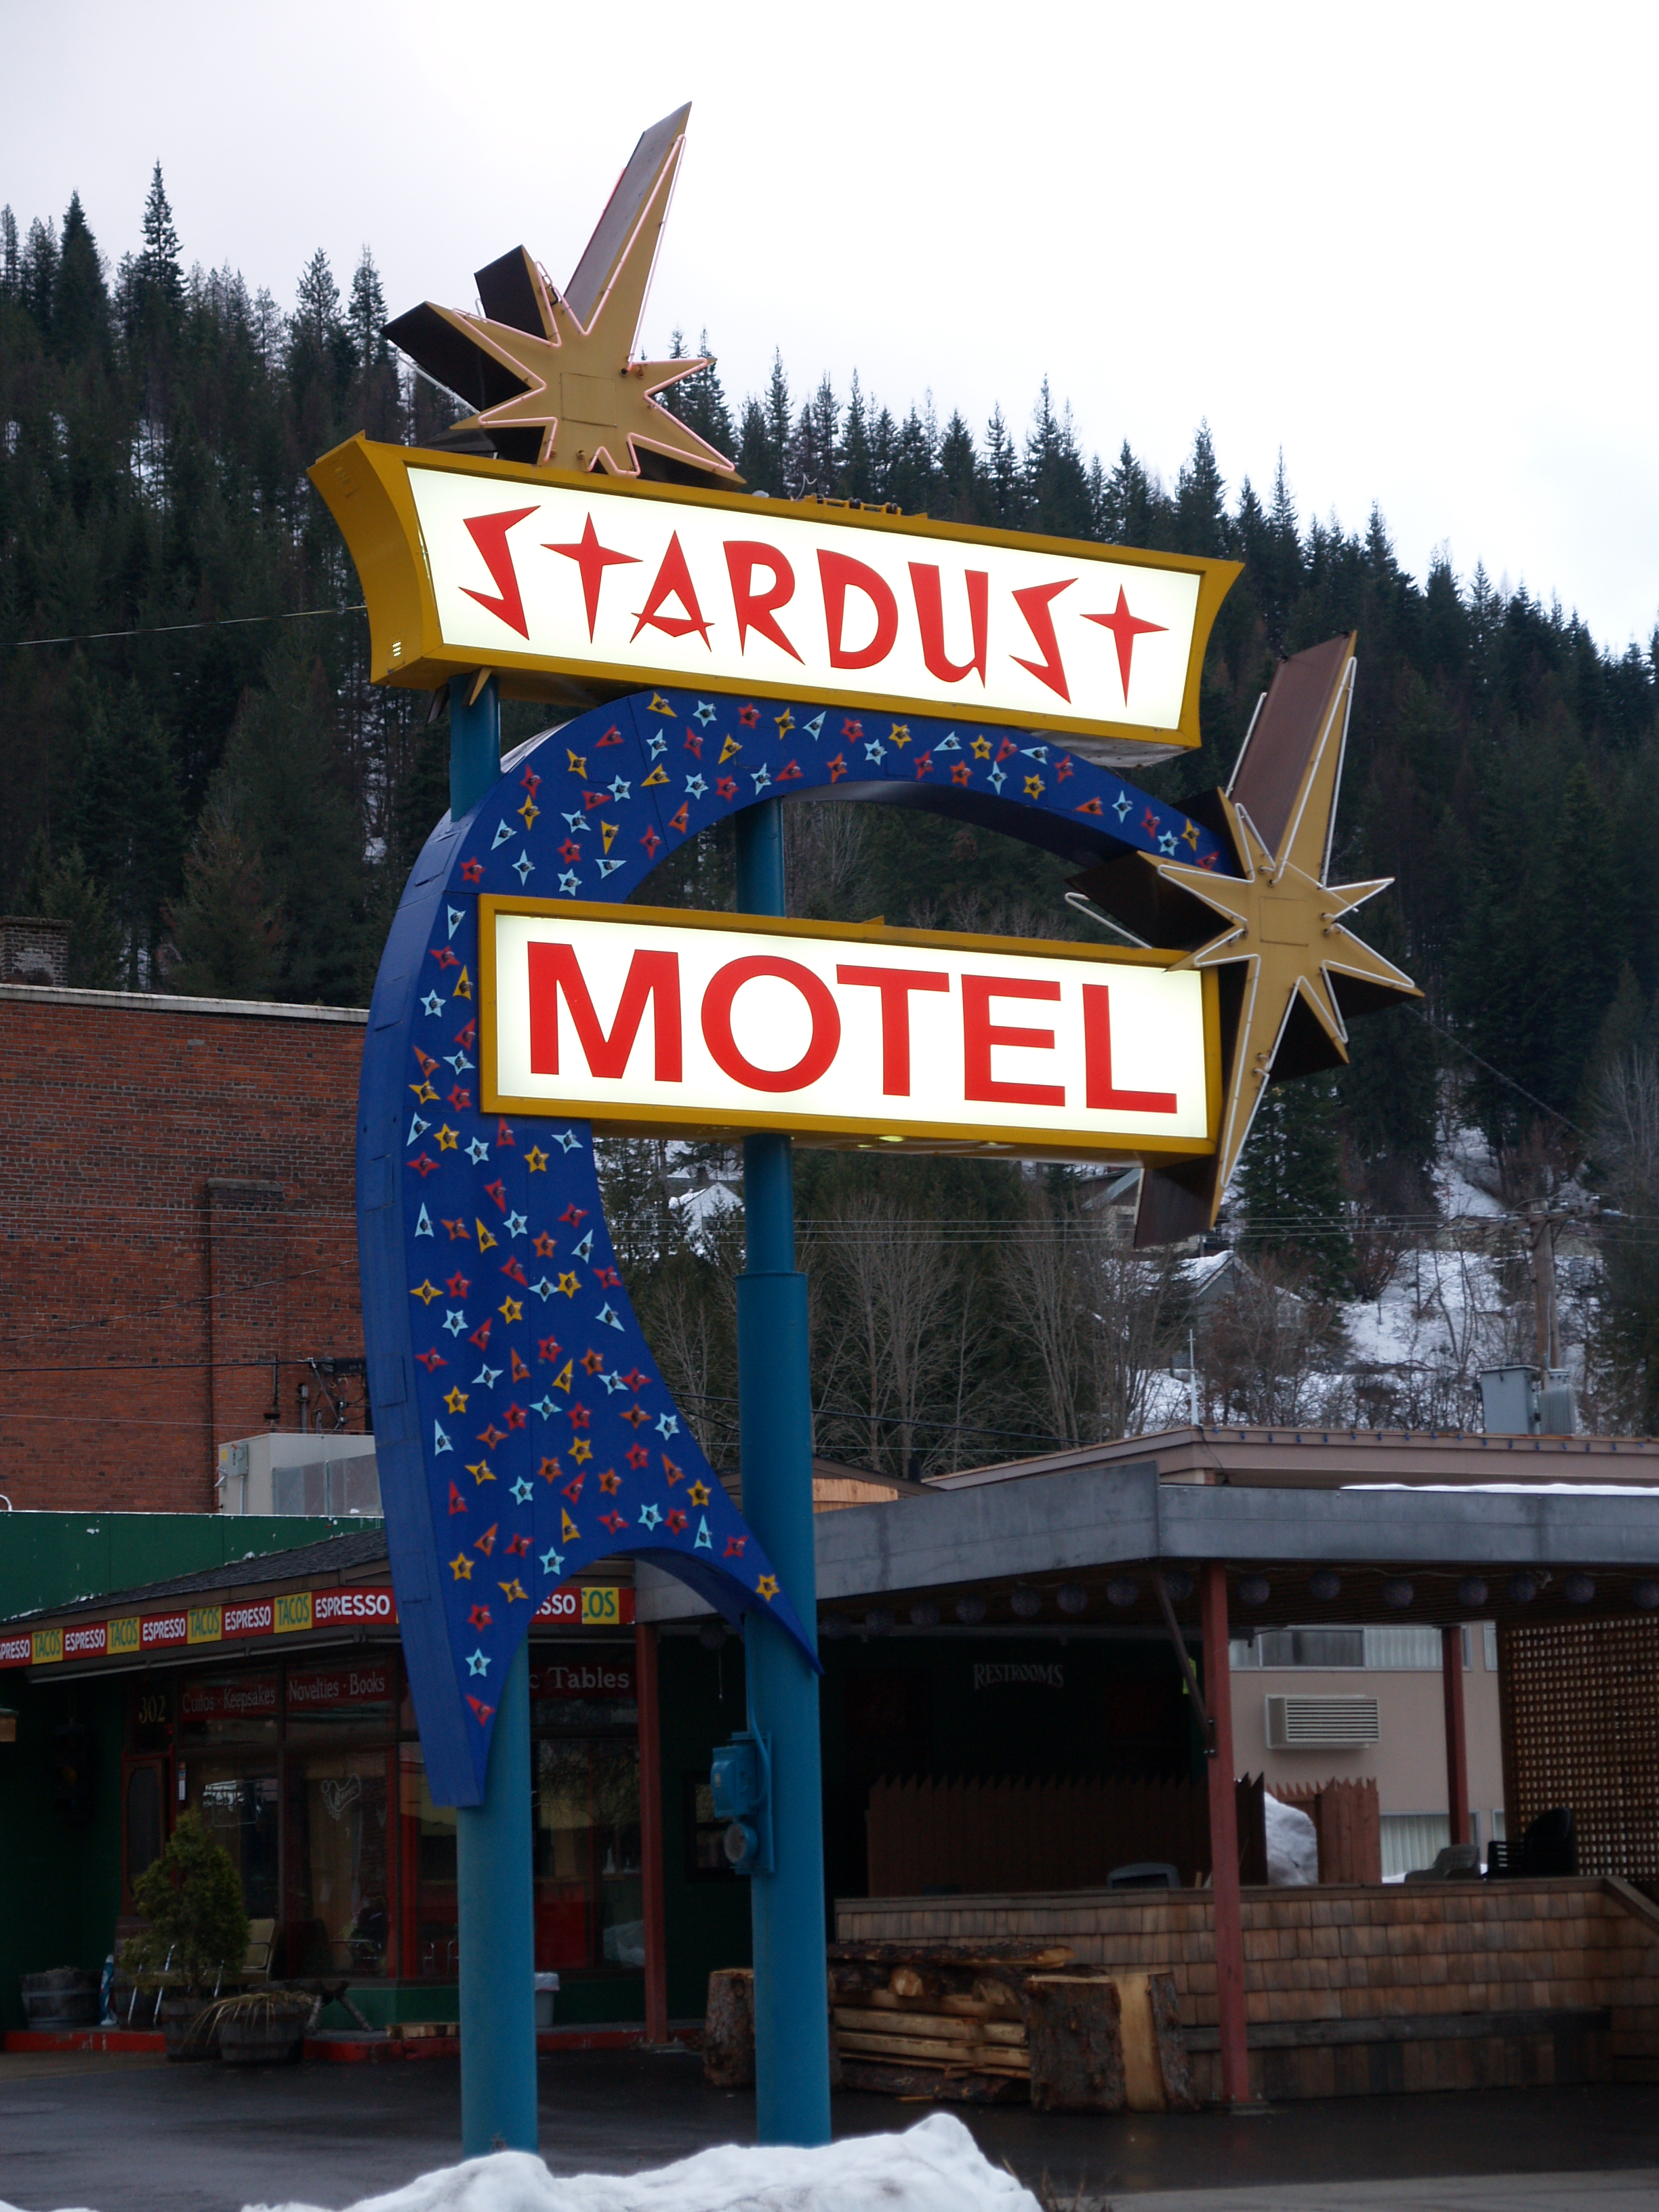 Stardust Motel - 410 Pine Street, Wallace, Idaho U.S.A. - March 17, 2008